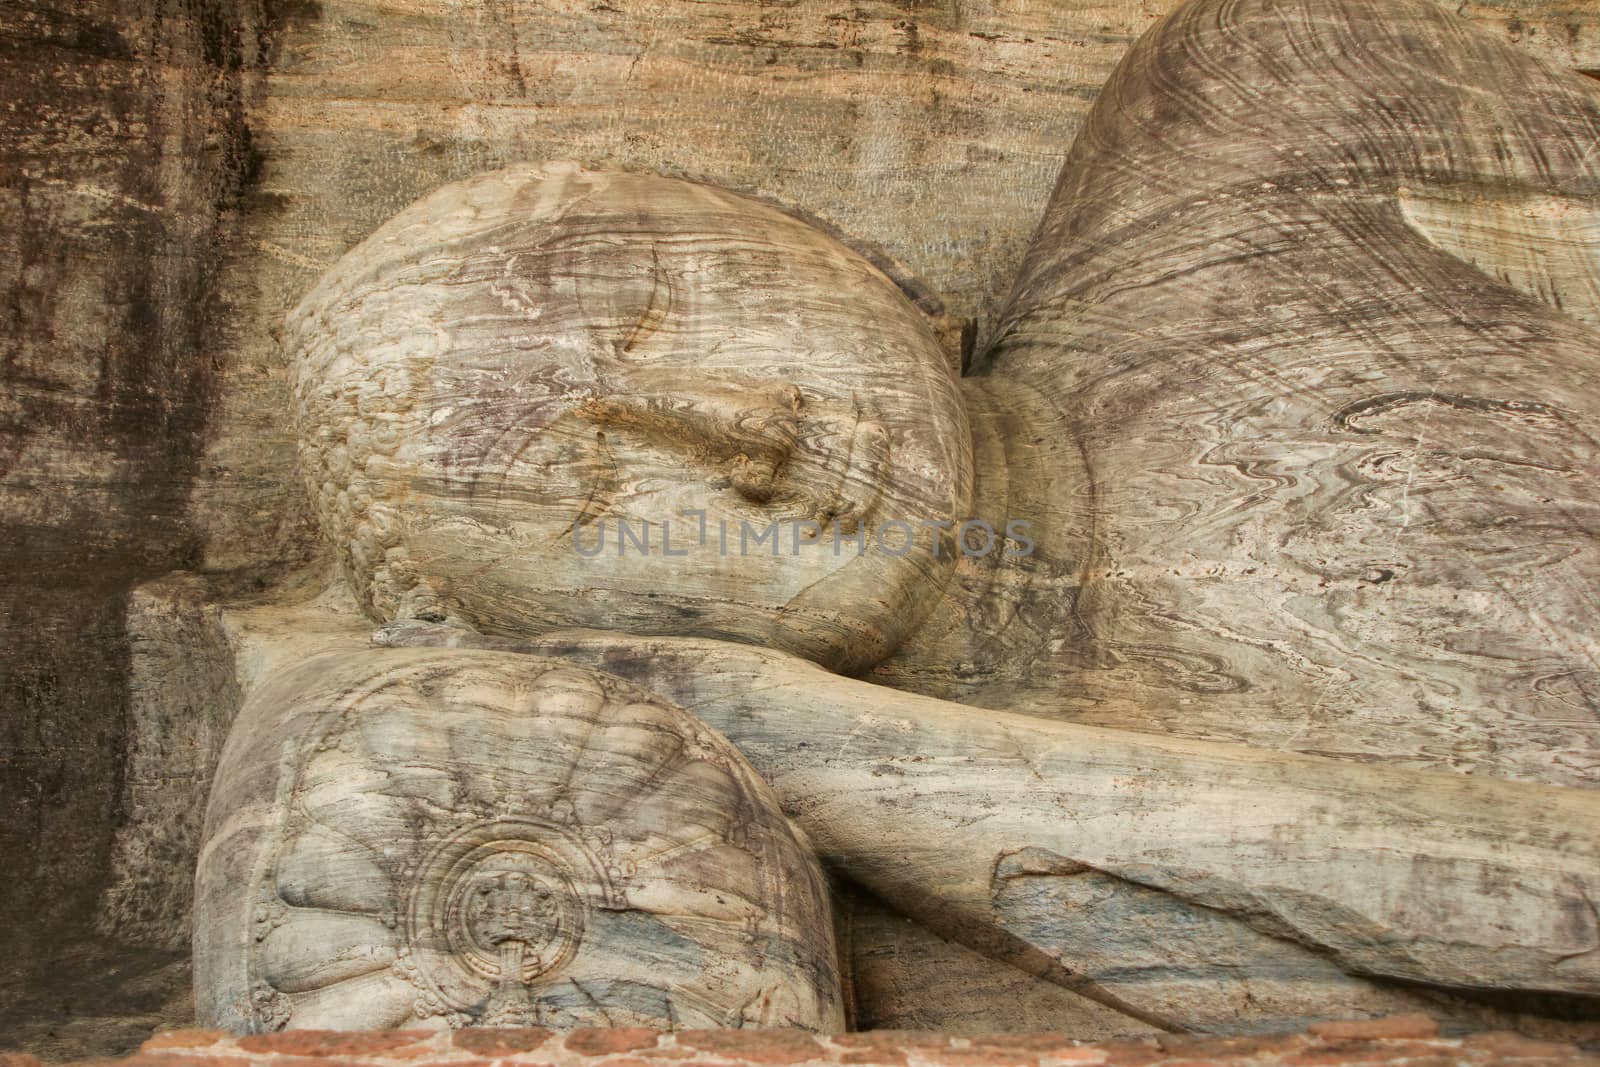 Polonnaruwa Sri Lanka Ancient ruins Statue of reclining Buddha laying down by kgboxford